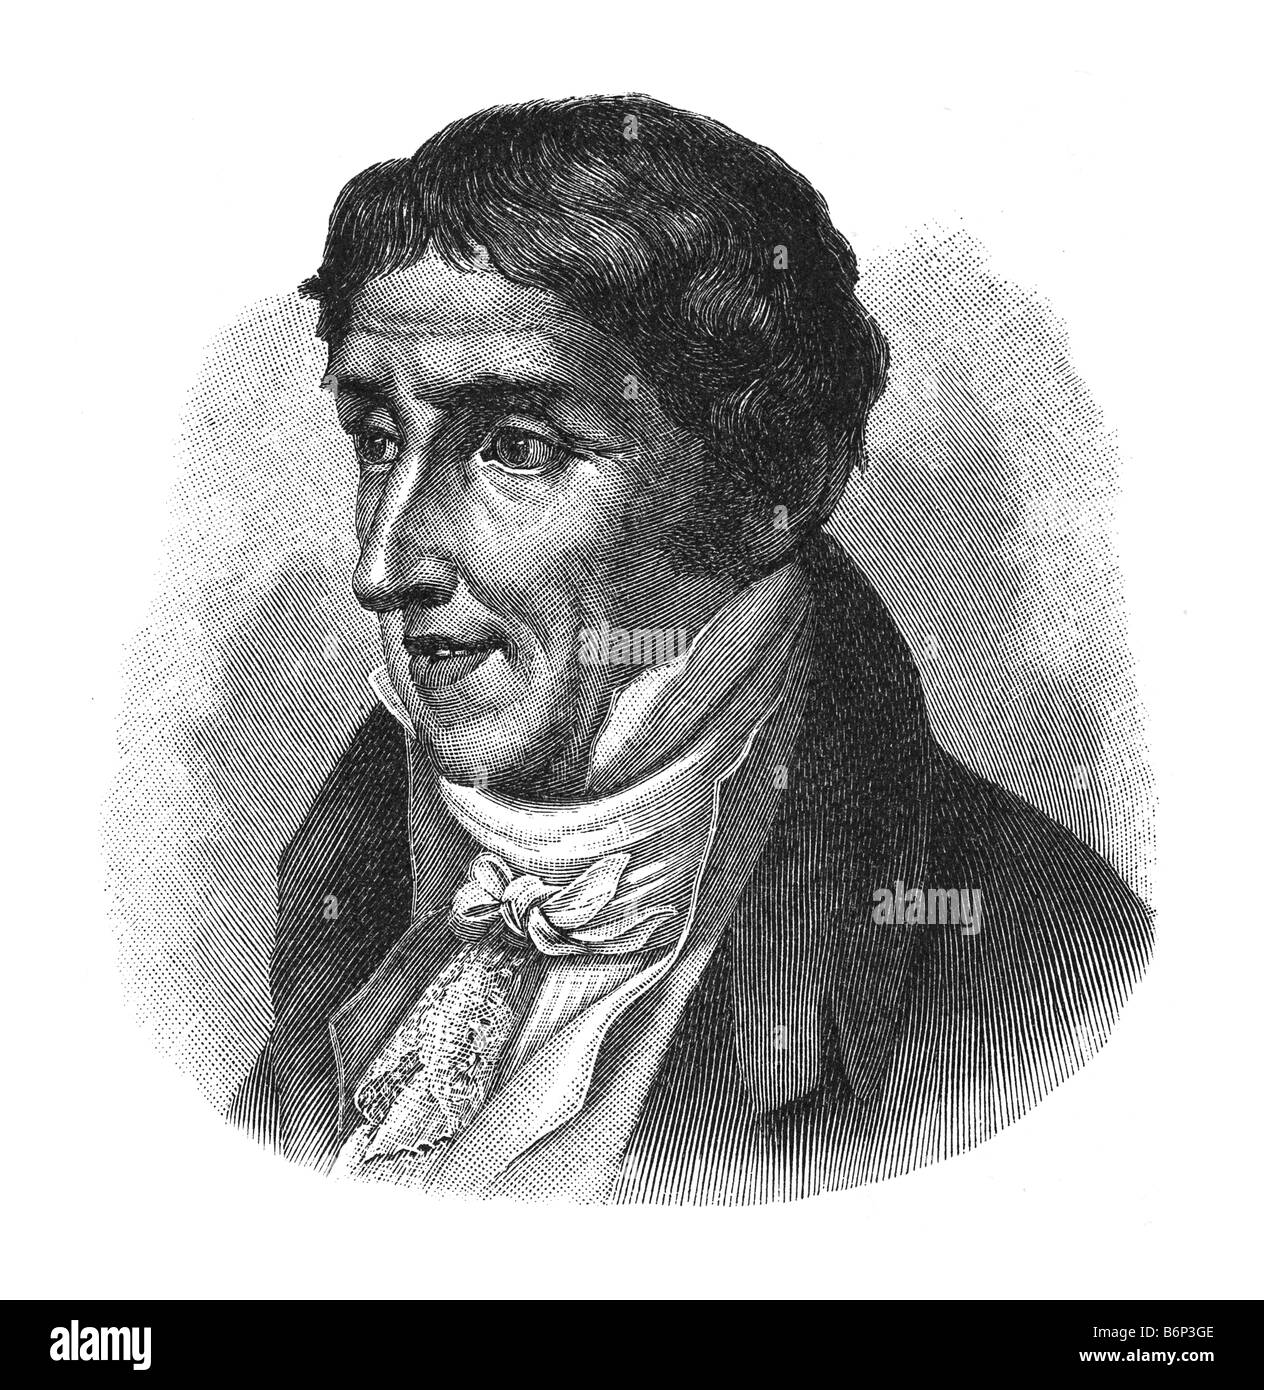 Count Alessandro Giuseppe Antonio Anastasio Volta, 18. February 1745 Como, Italy - 5. March 1827 Camnago near Como Stock Photo